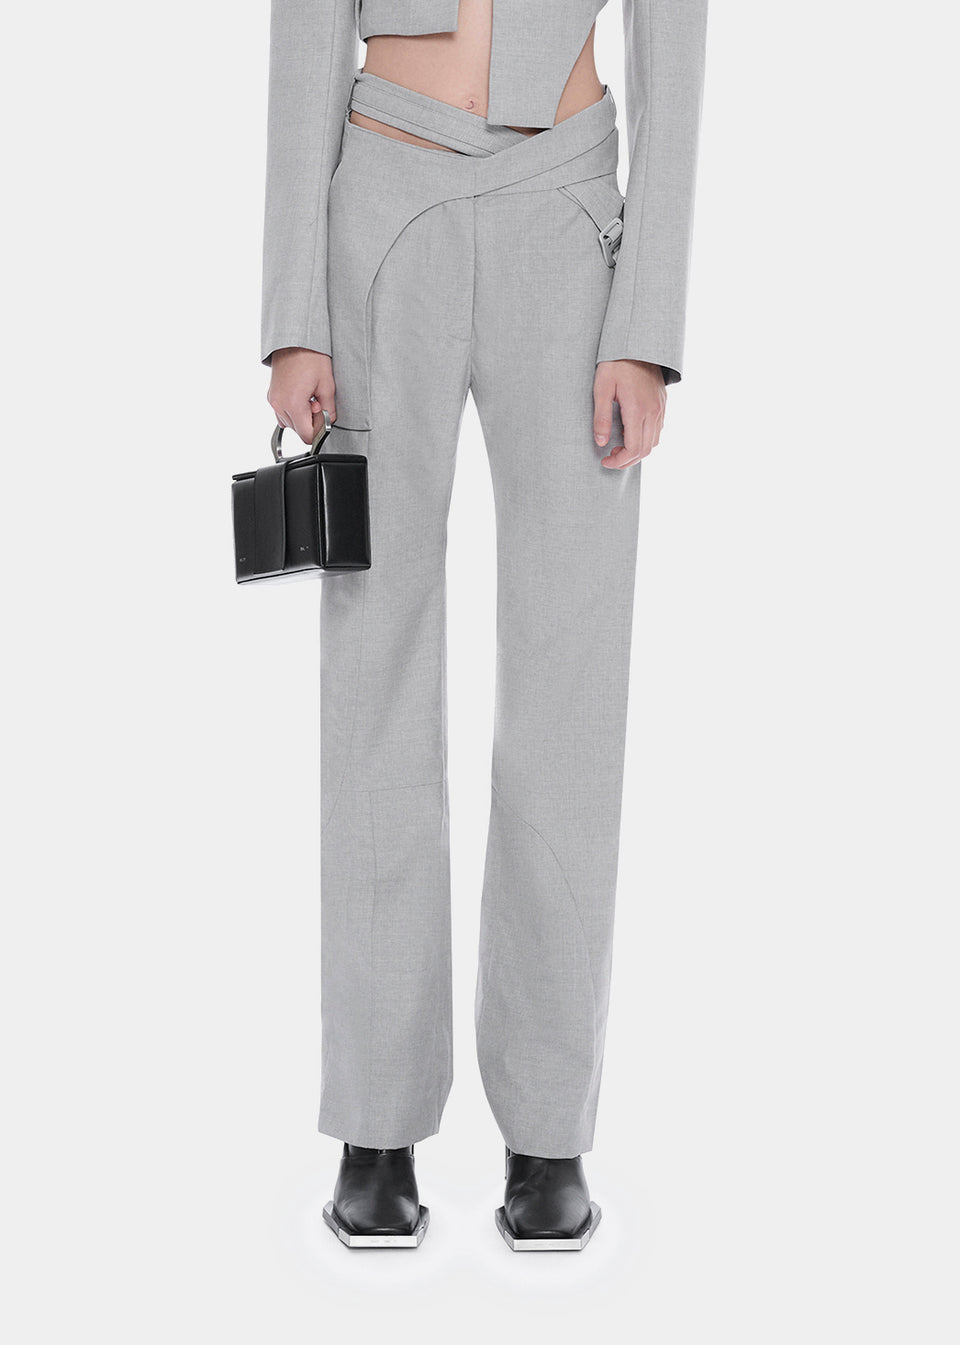 NWT Heliot Emil Liquid Metal Trouser Pants size 44 S XS $640 Gray Grey